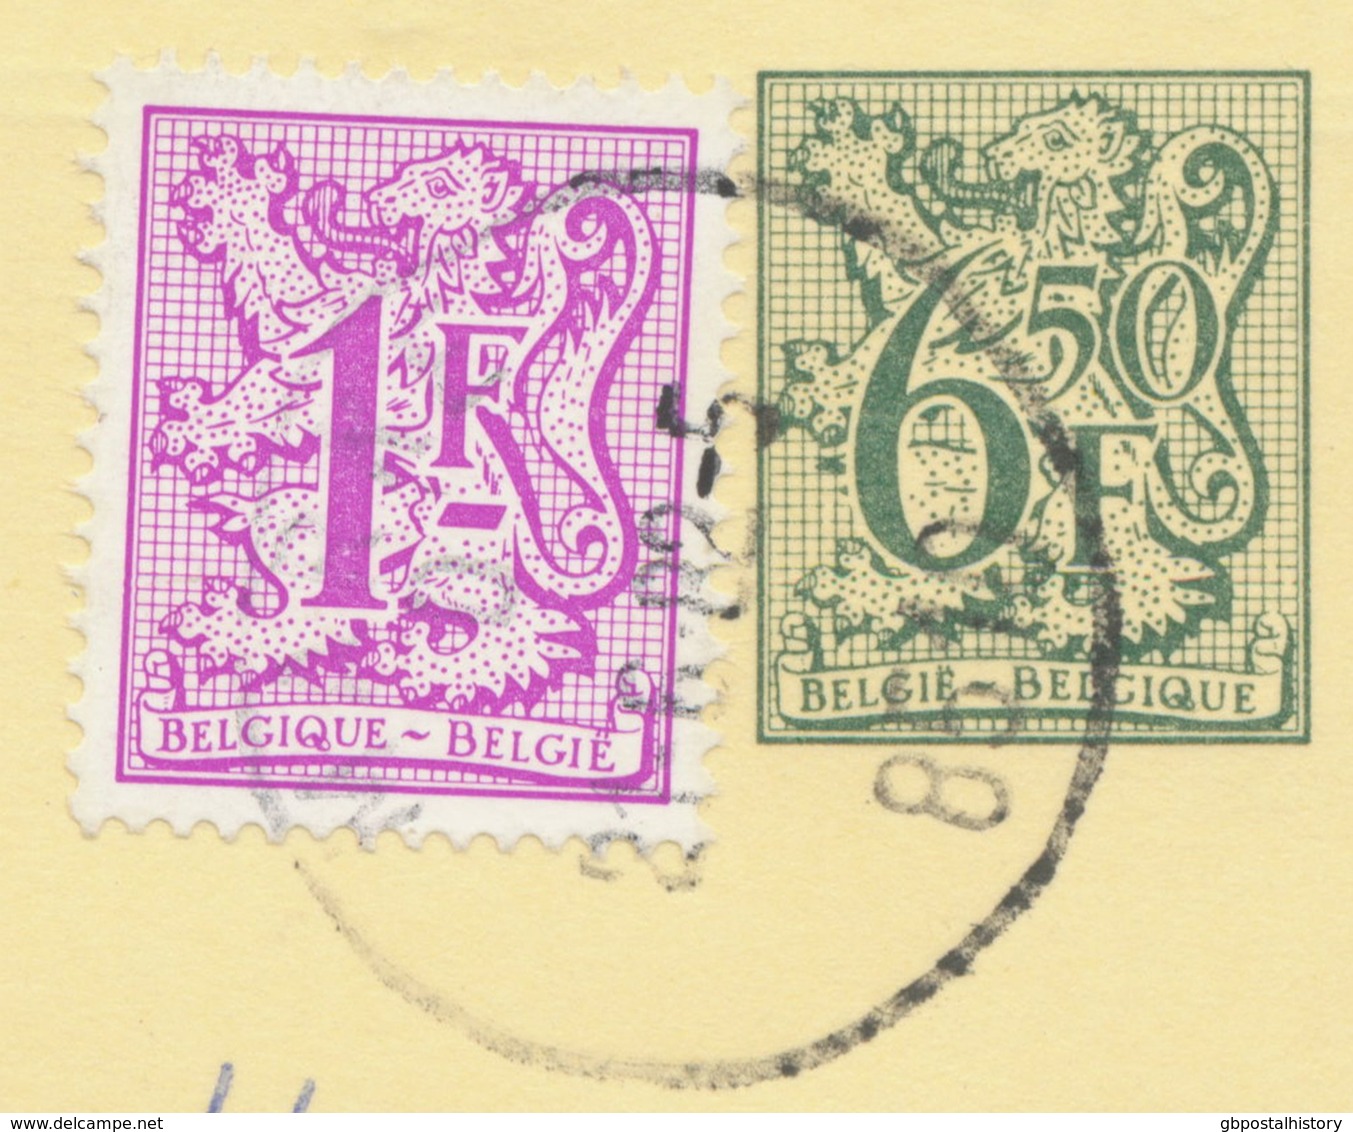 BELGIUM MARKE 8510 SC 1982 Postal Stationery 6,50 F + 1 F, PUBLIBEL 2771 N Rare Postal Automation Luminous Yellow Code - 1961-1990